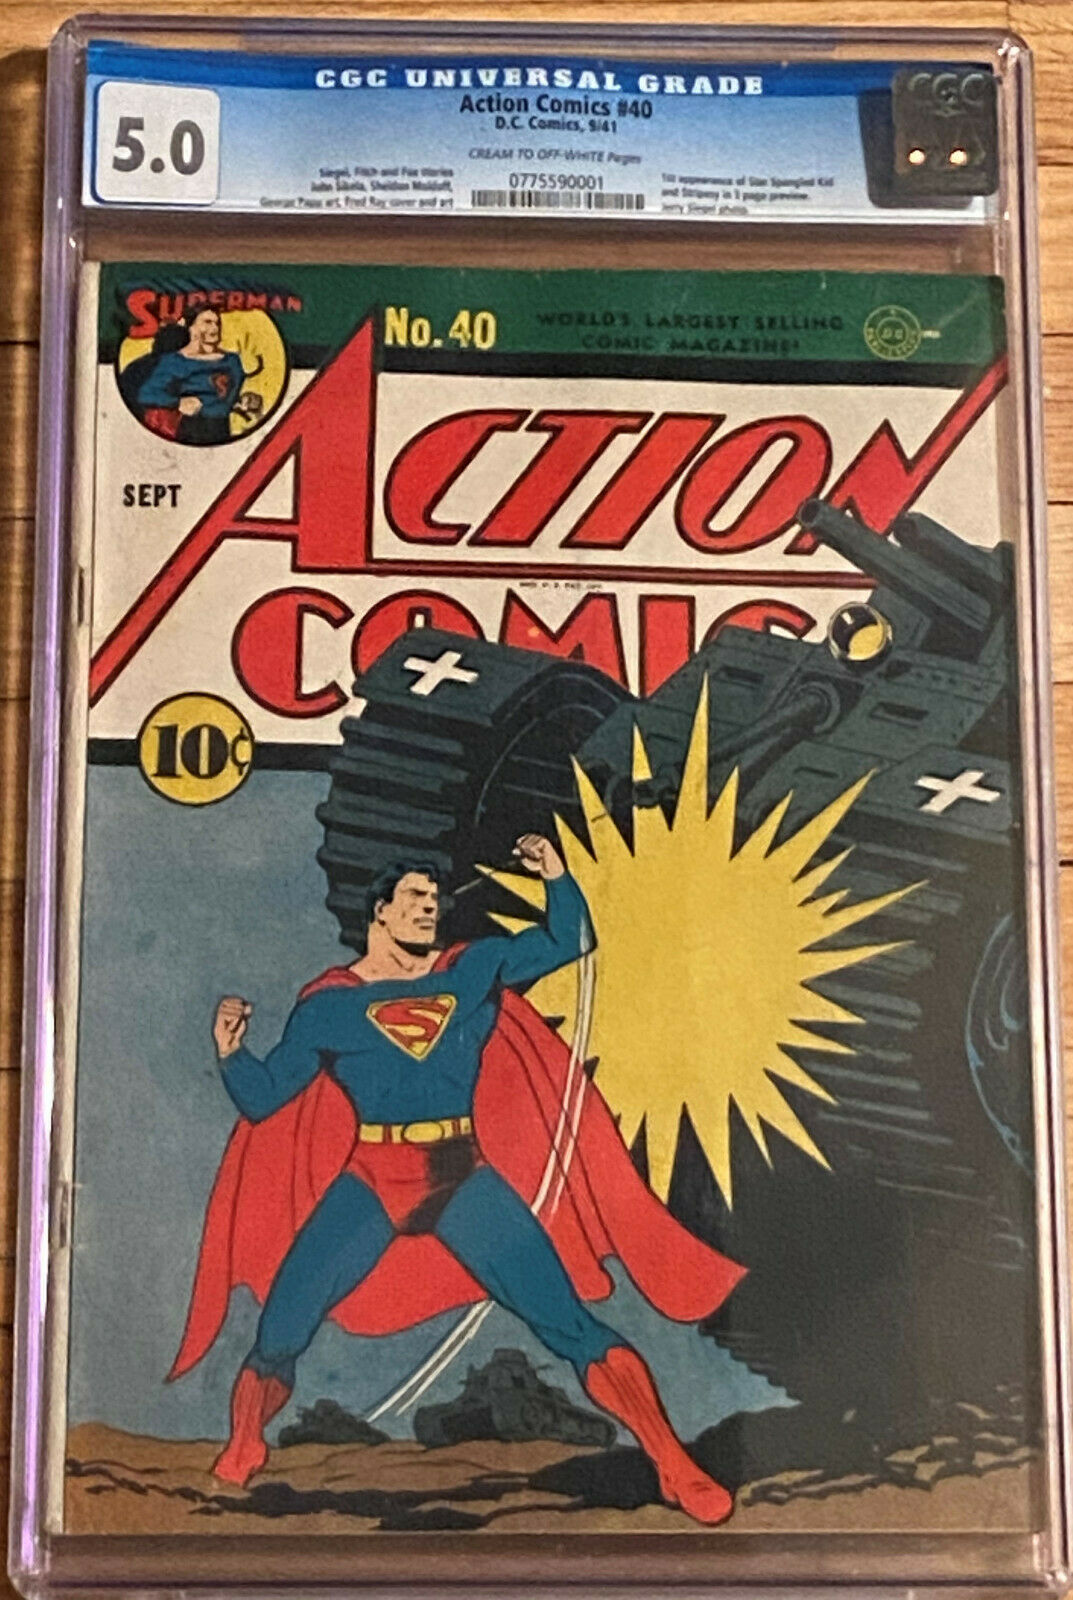 ACTION COMICS 40 1941 CGC 50 Superman vs Nazi Tank cvr1st Star Spangled Kid